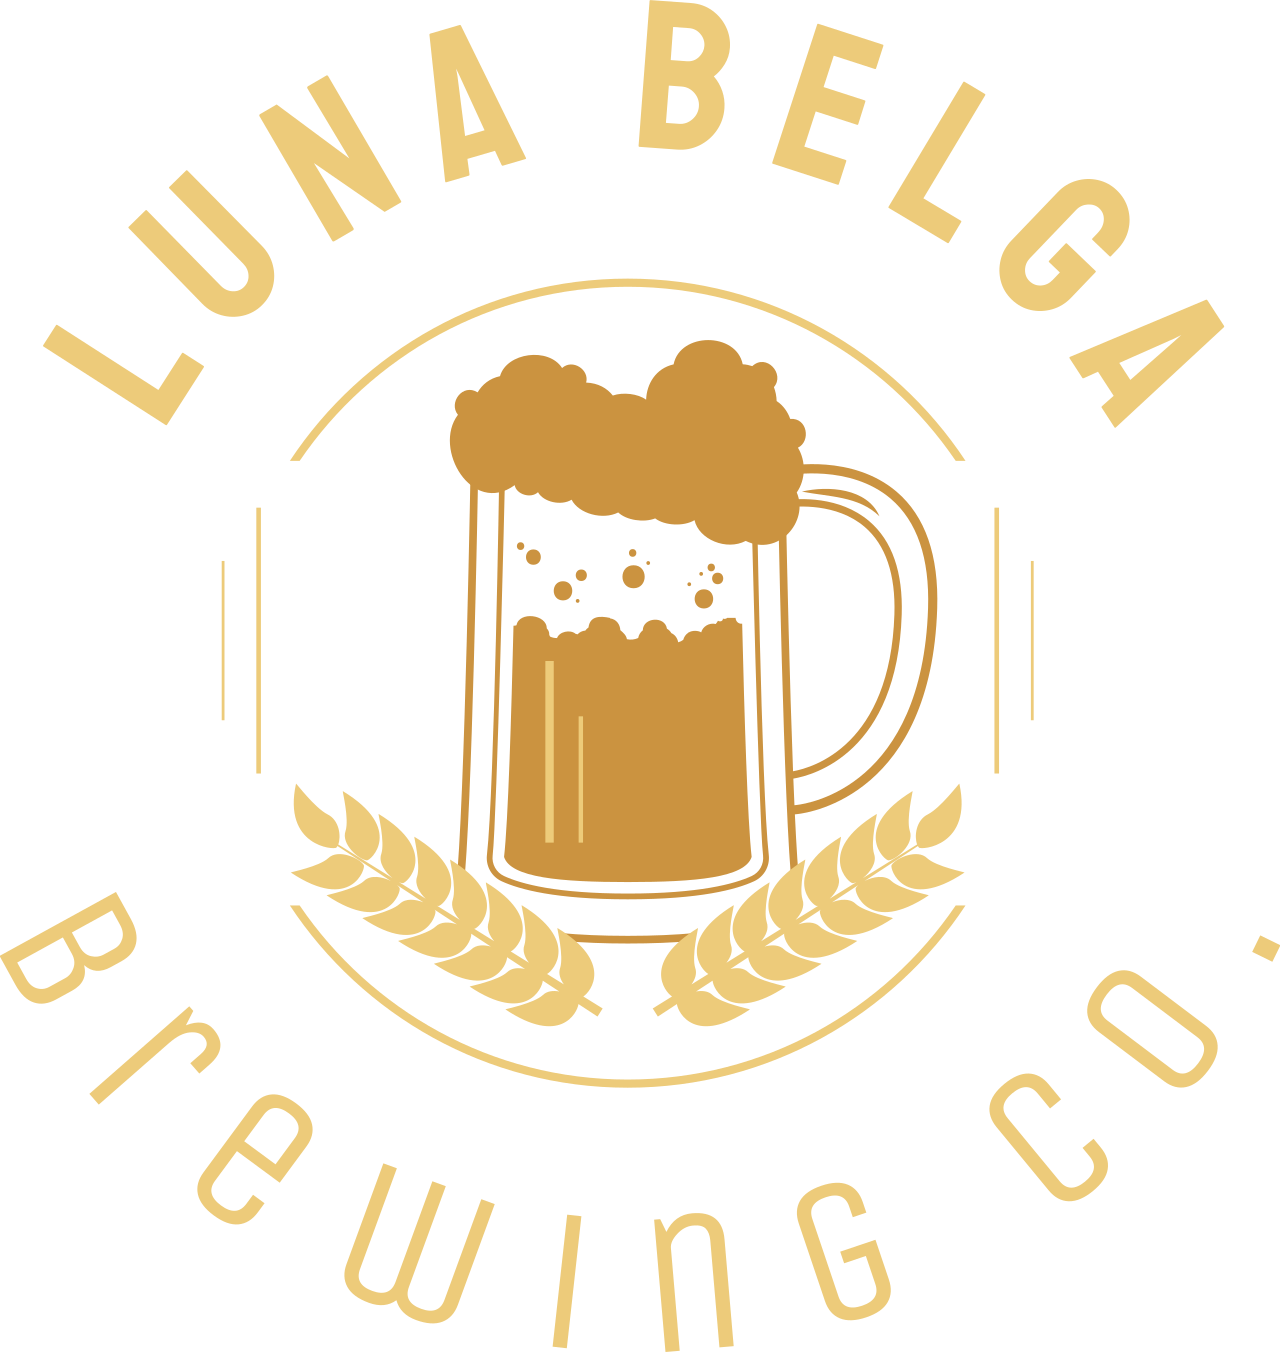 Luna Belga Brewing Co.'s logo